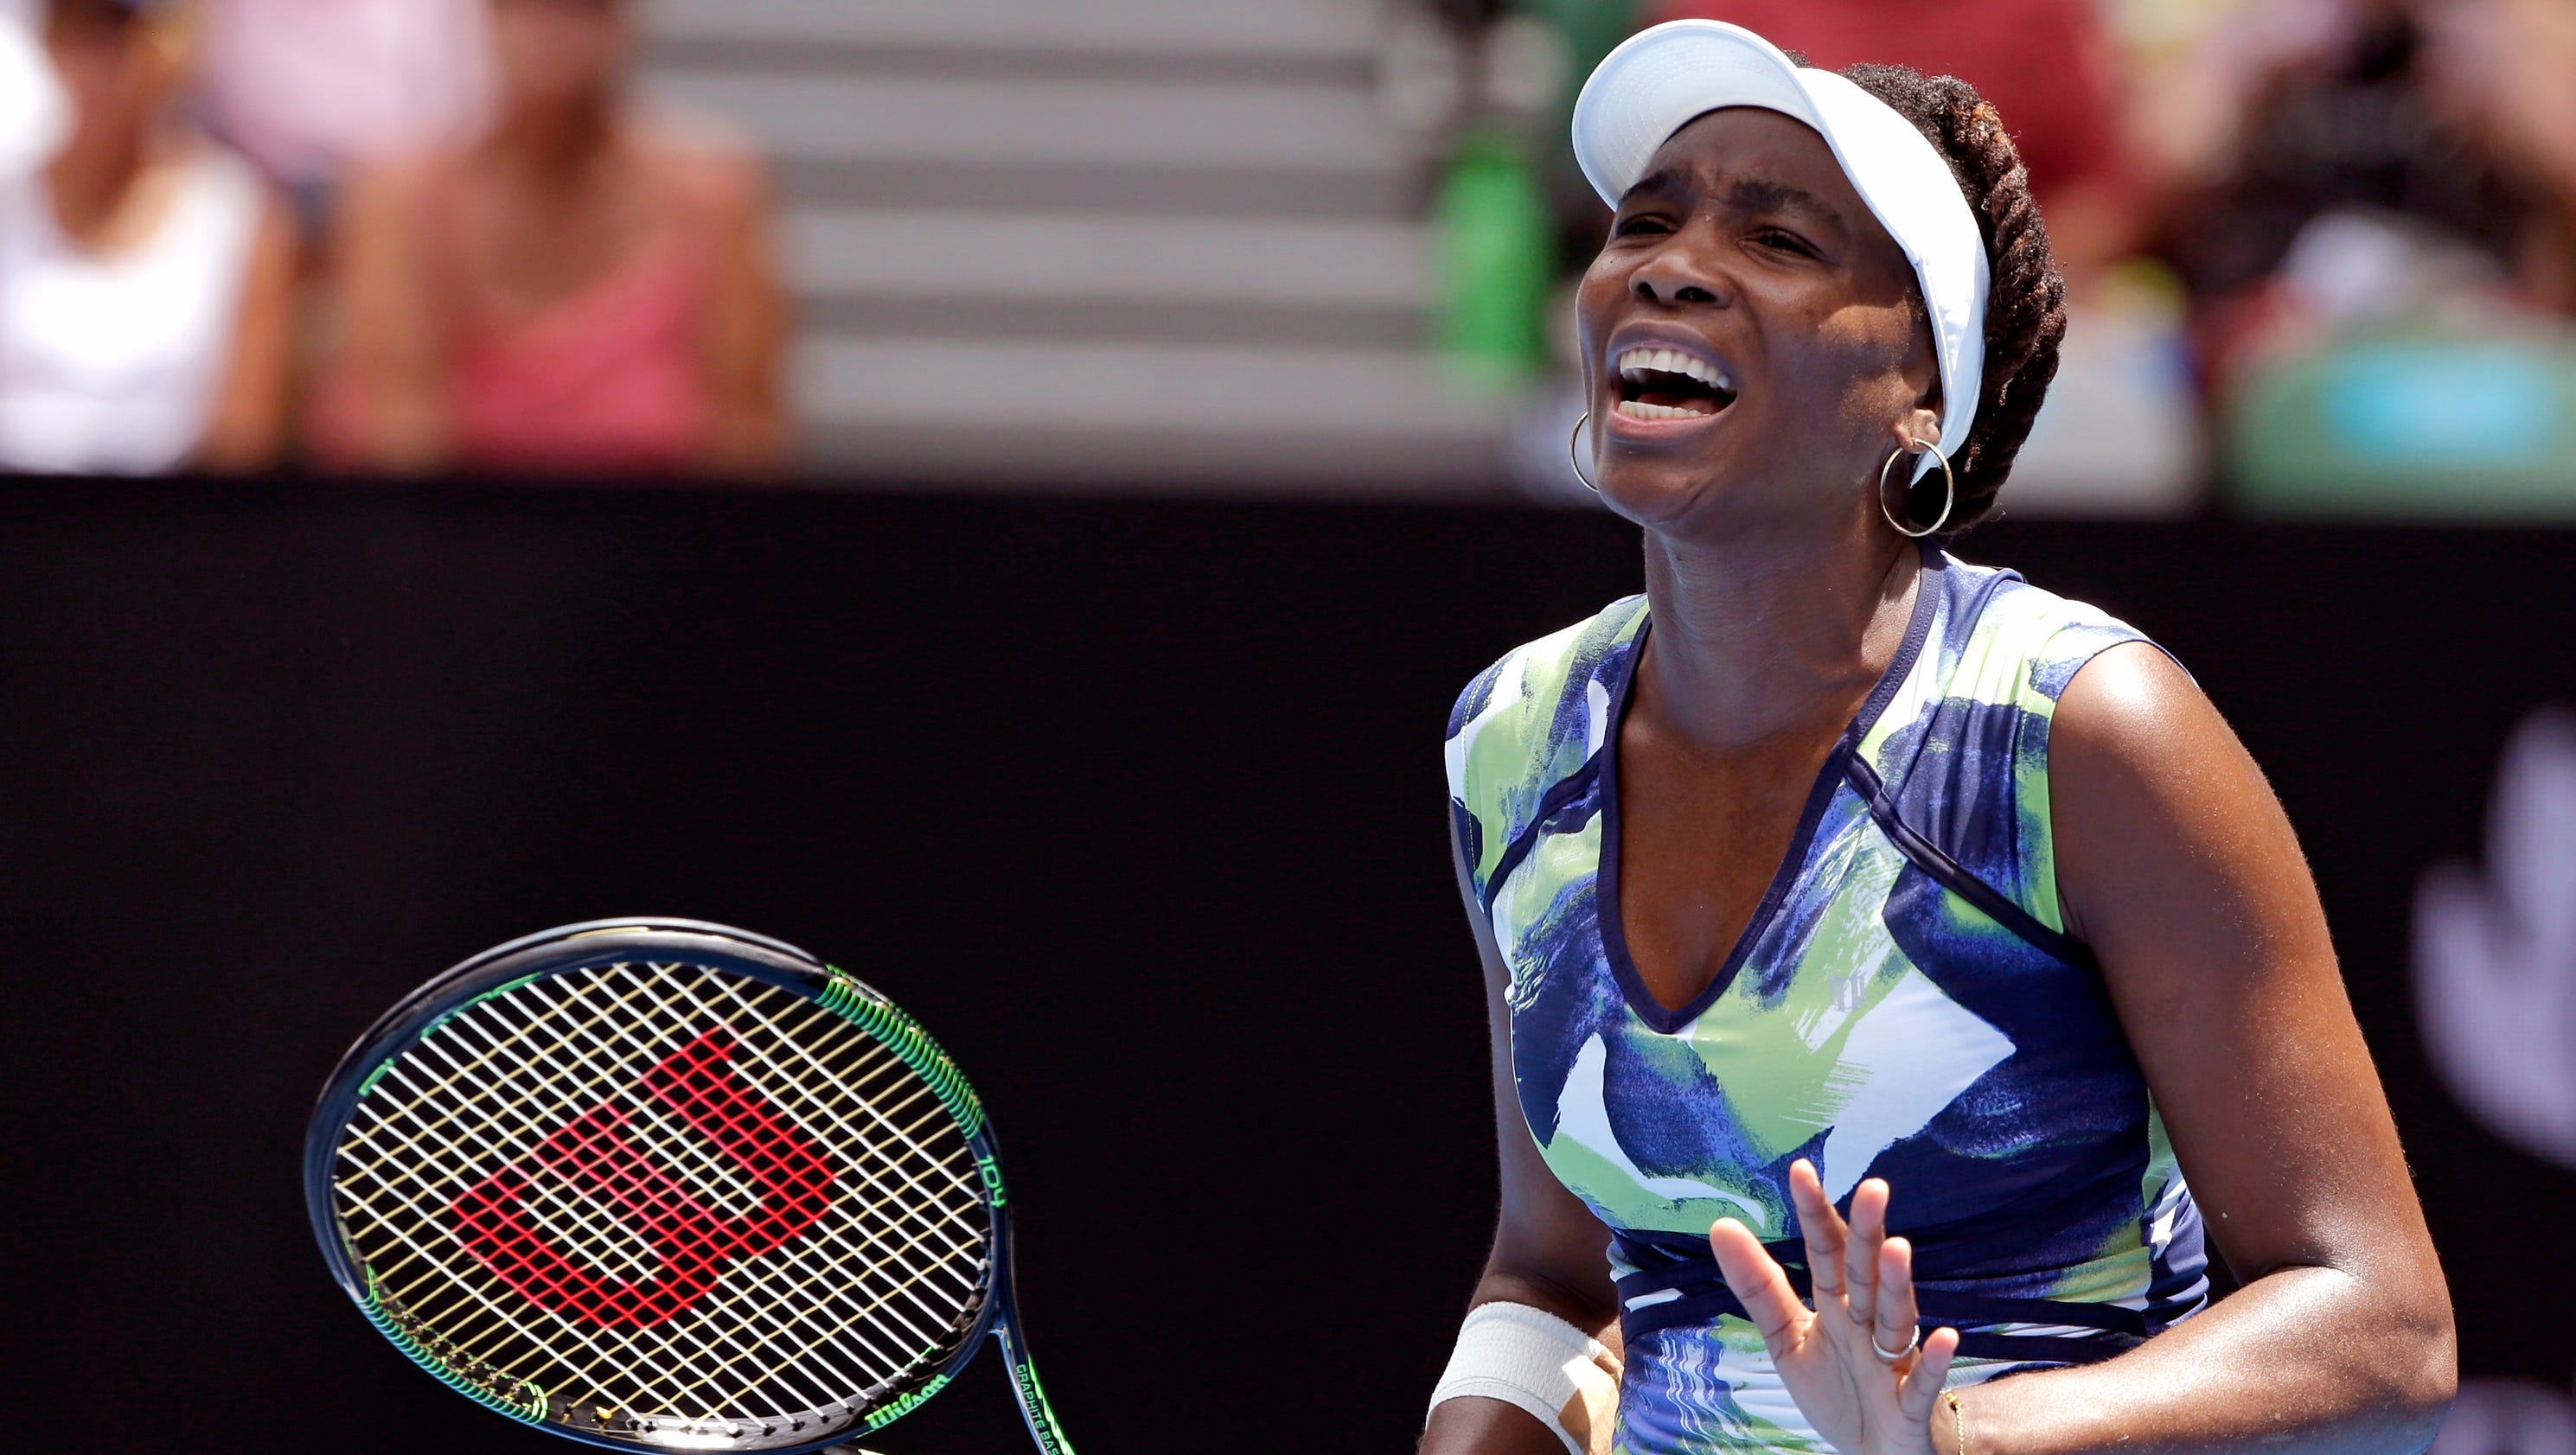 Venus Williams upset in first round at Australian Open